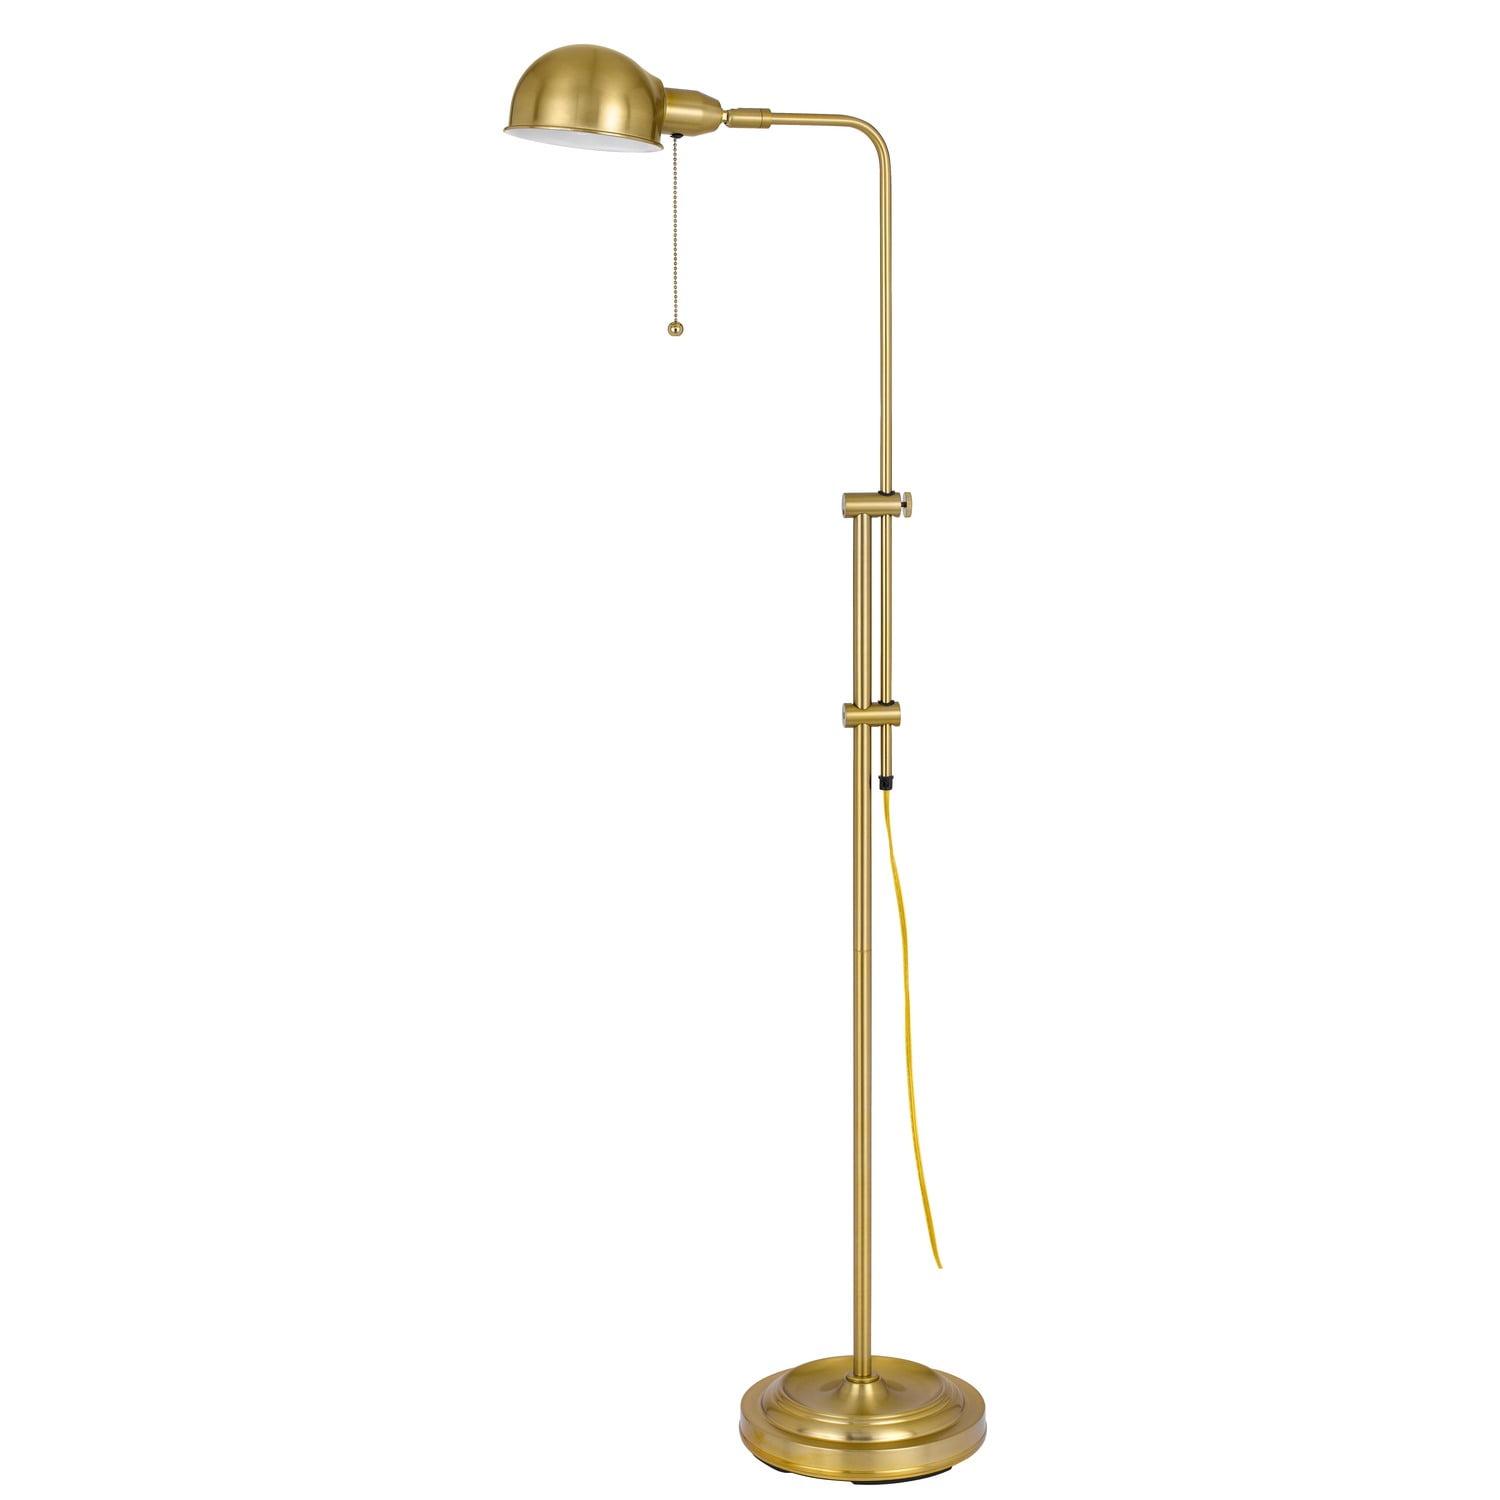 Slim Antique Brass Pharmacy Floor Lamp with Adjustable Arm